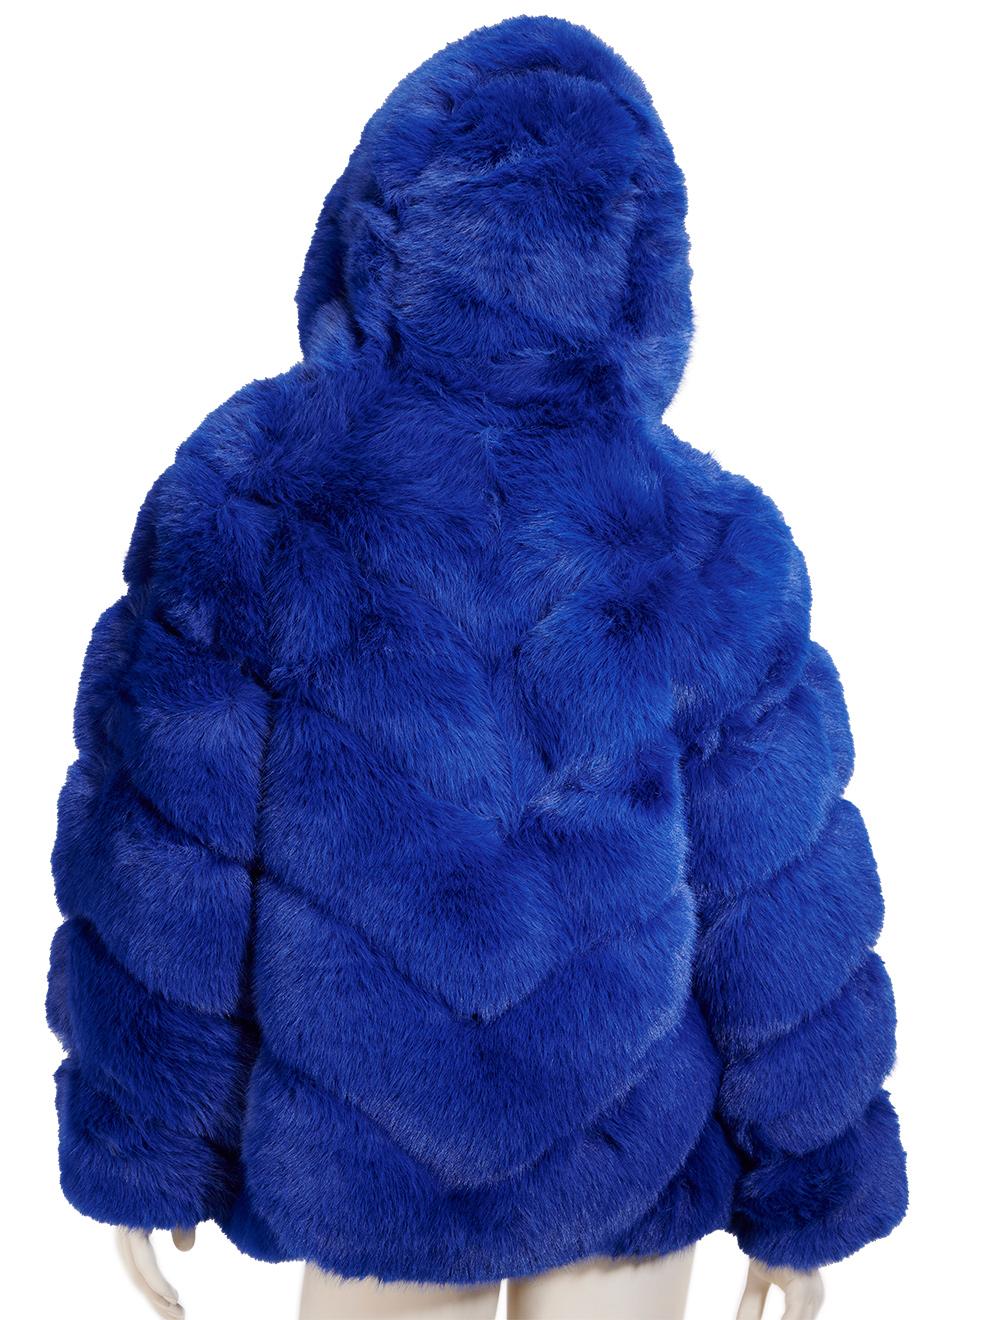 Cornflower blue faux fur - Save The Queen!